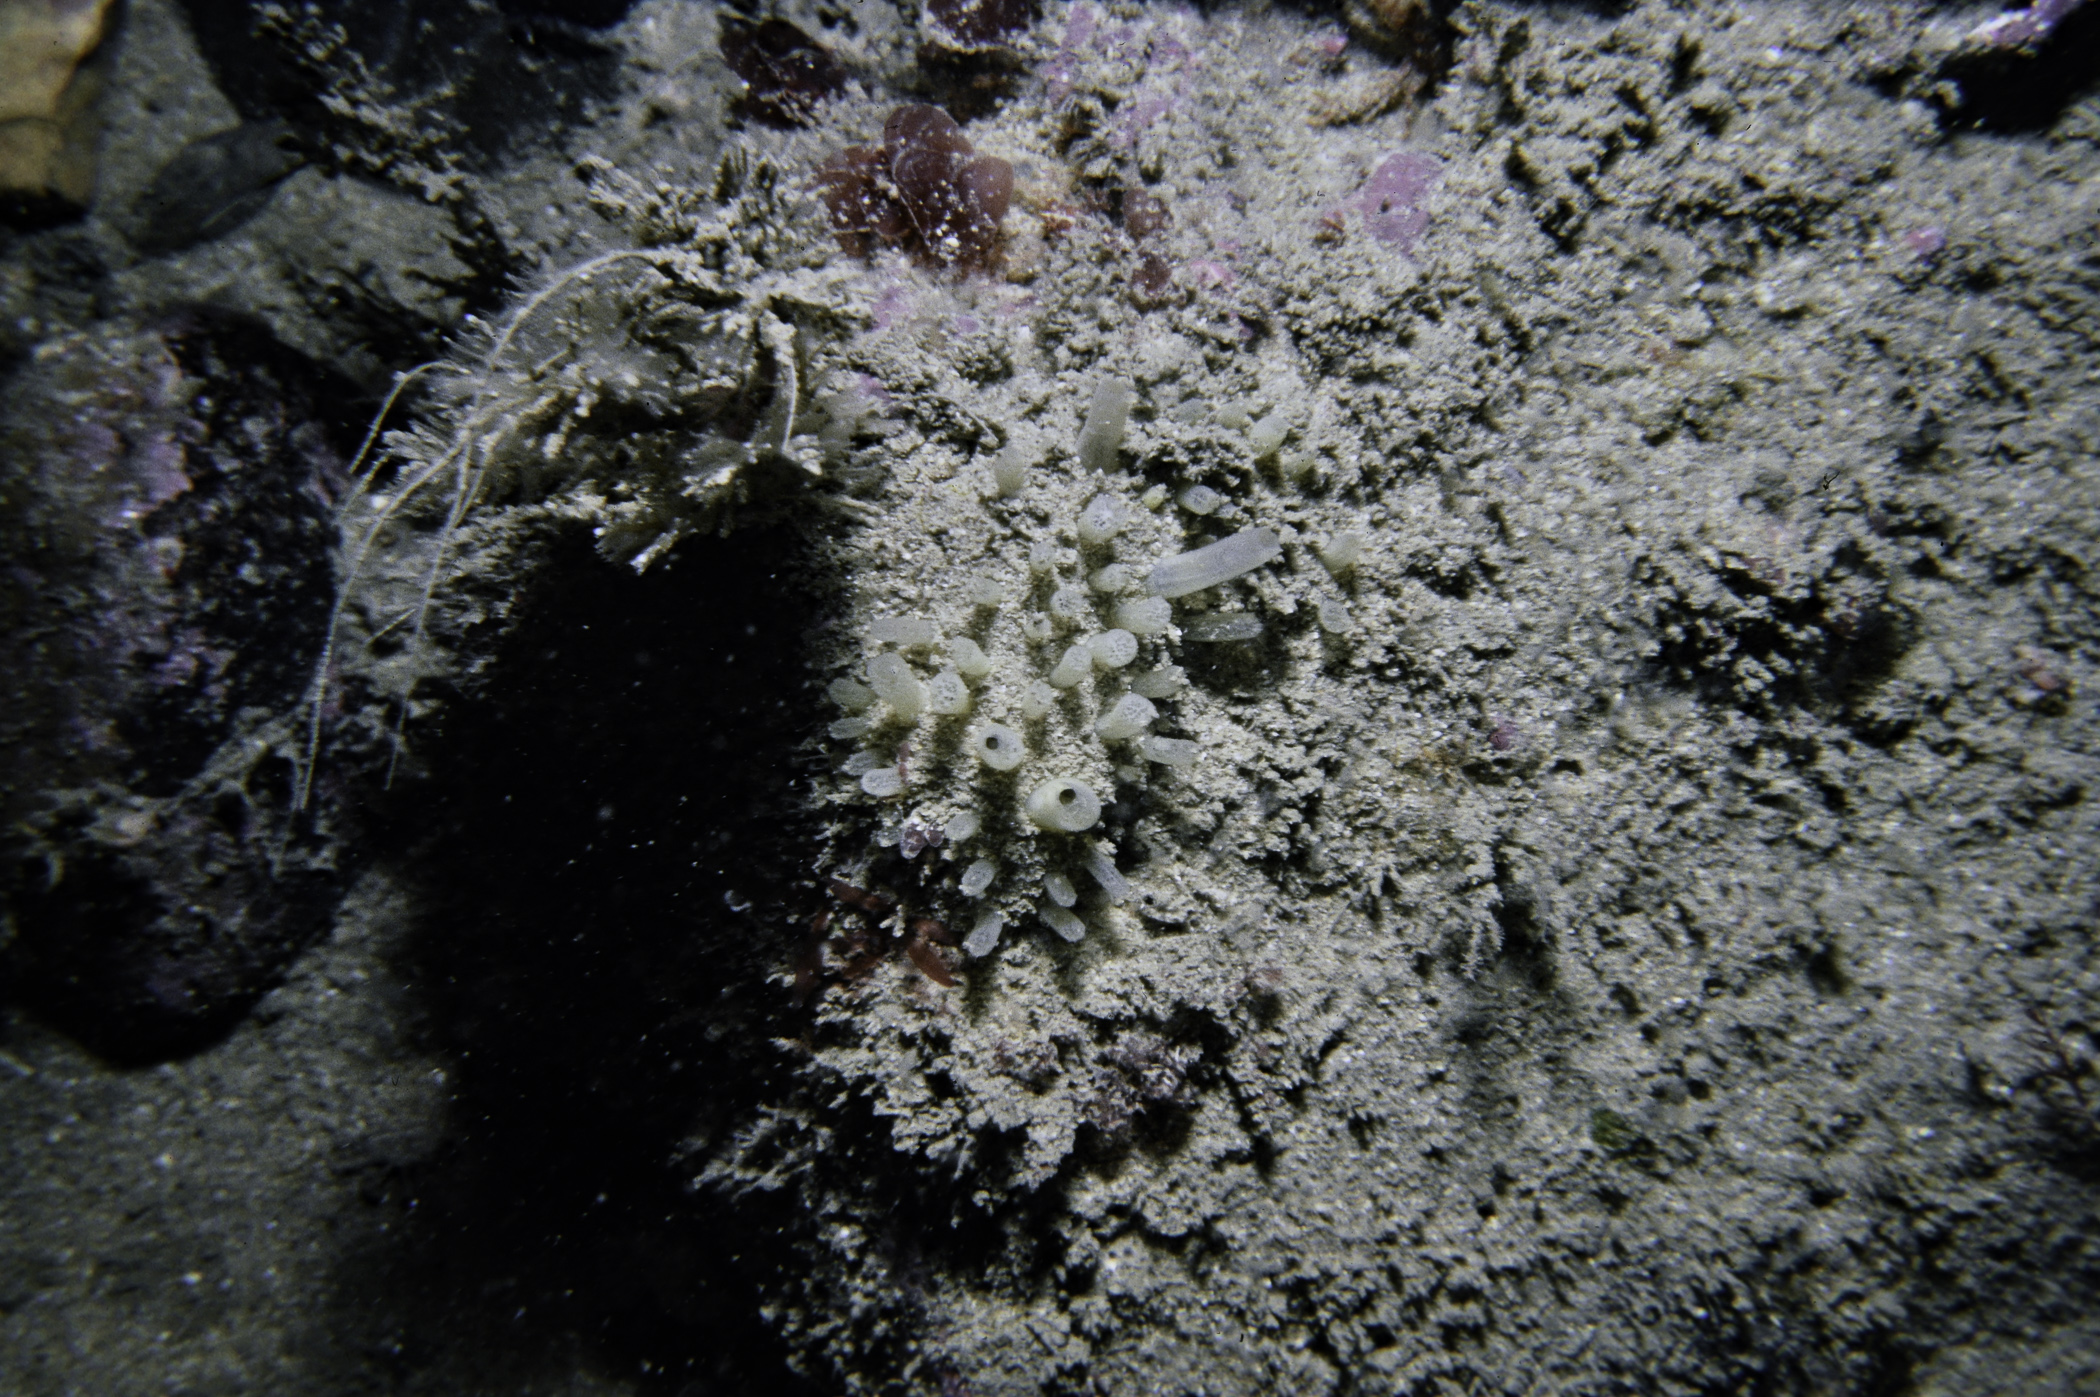 Polymastia penicillus. Site: N of Otter Rock, Gid Point. 